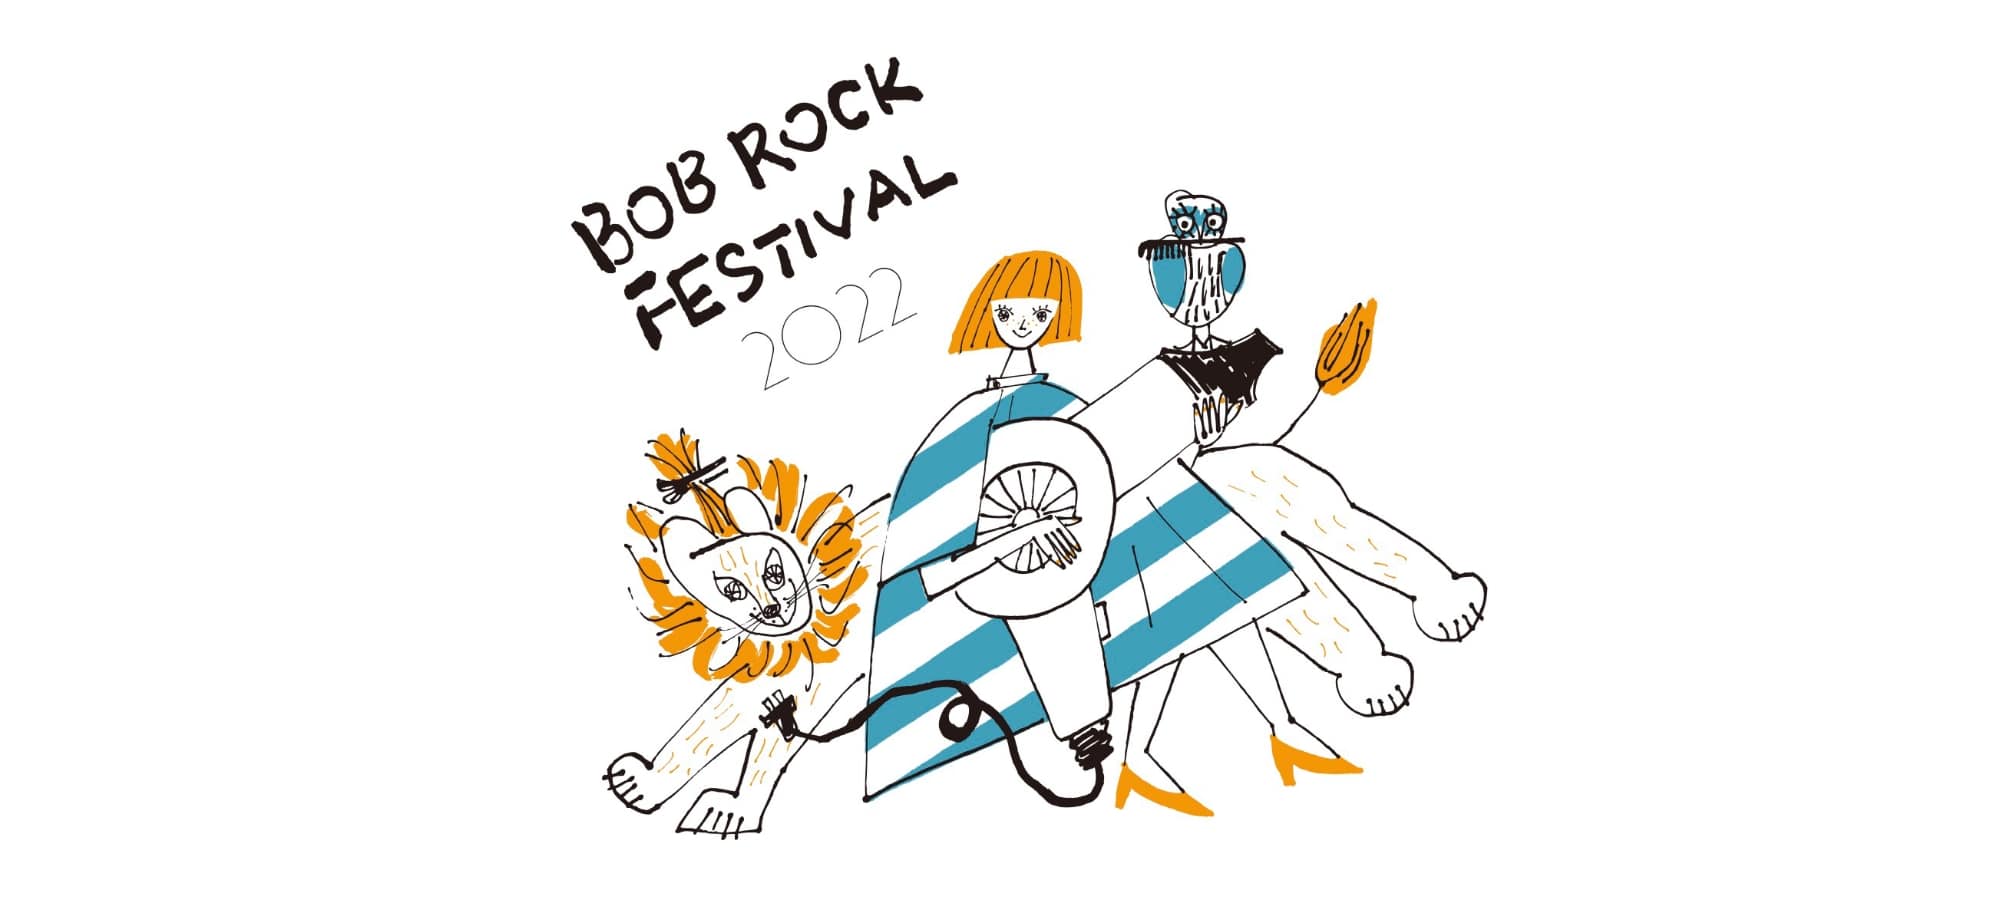 BOB ROCK FESTIVAL